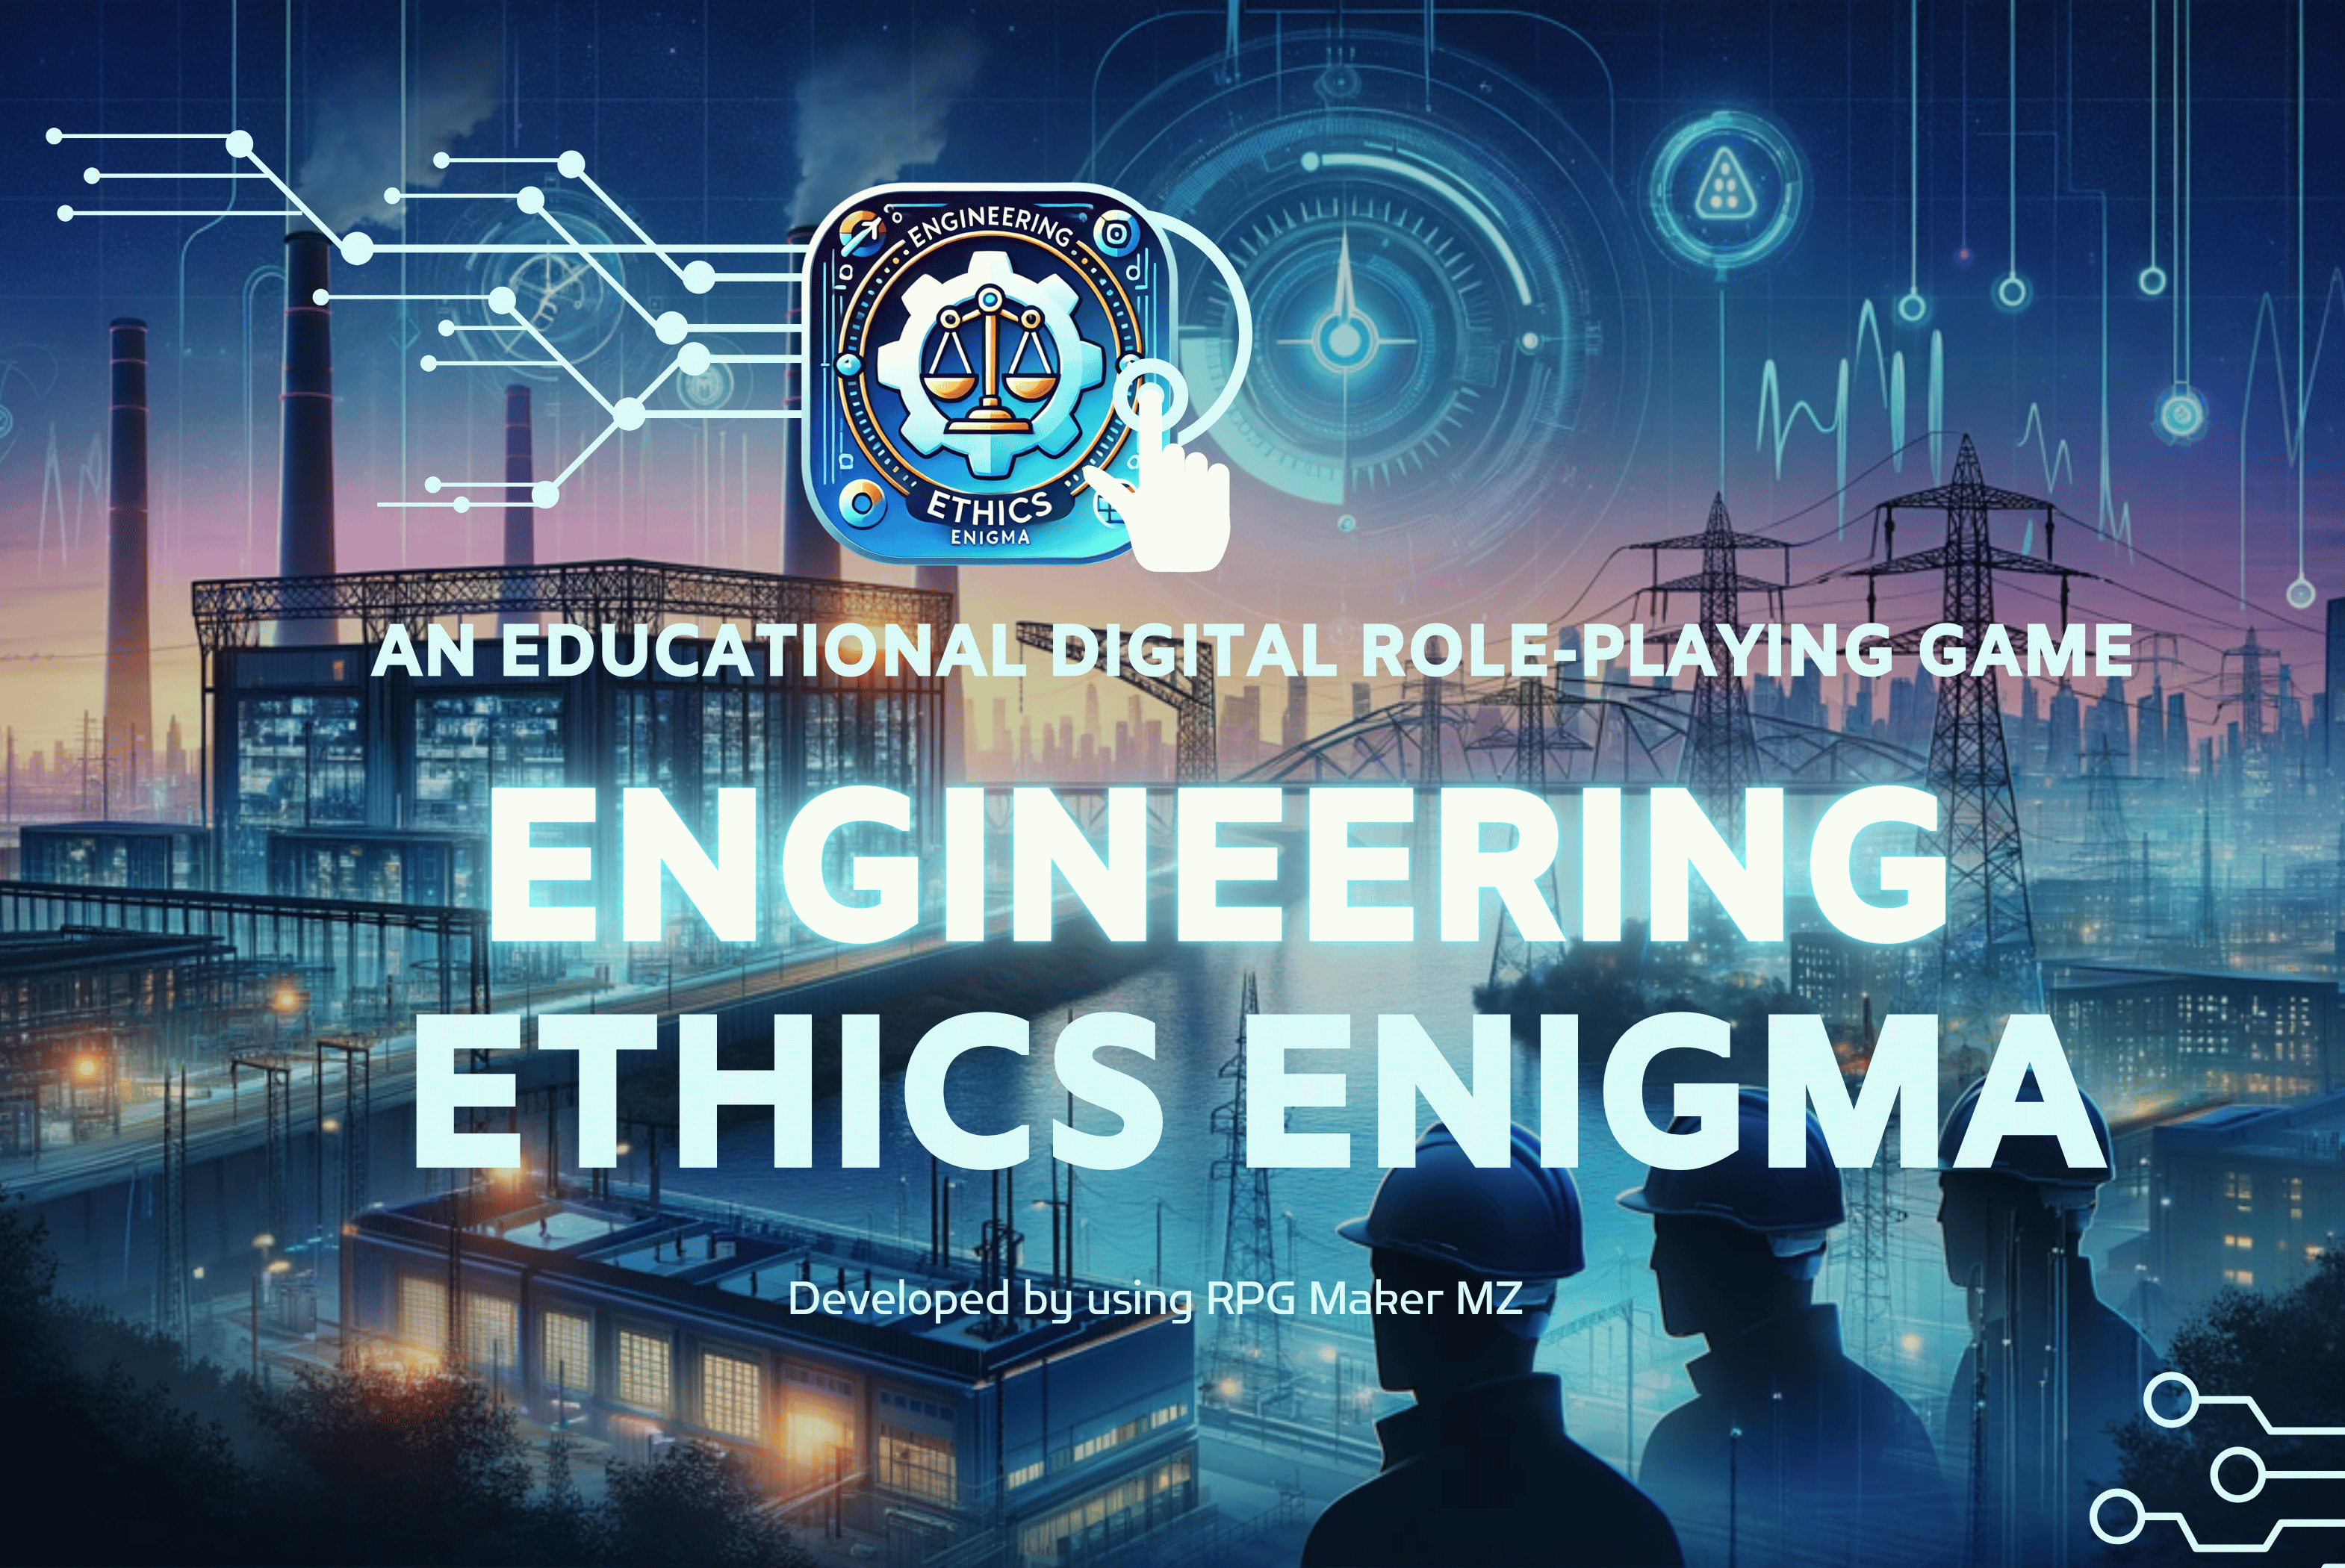 Engineering Ethics Enigma